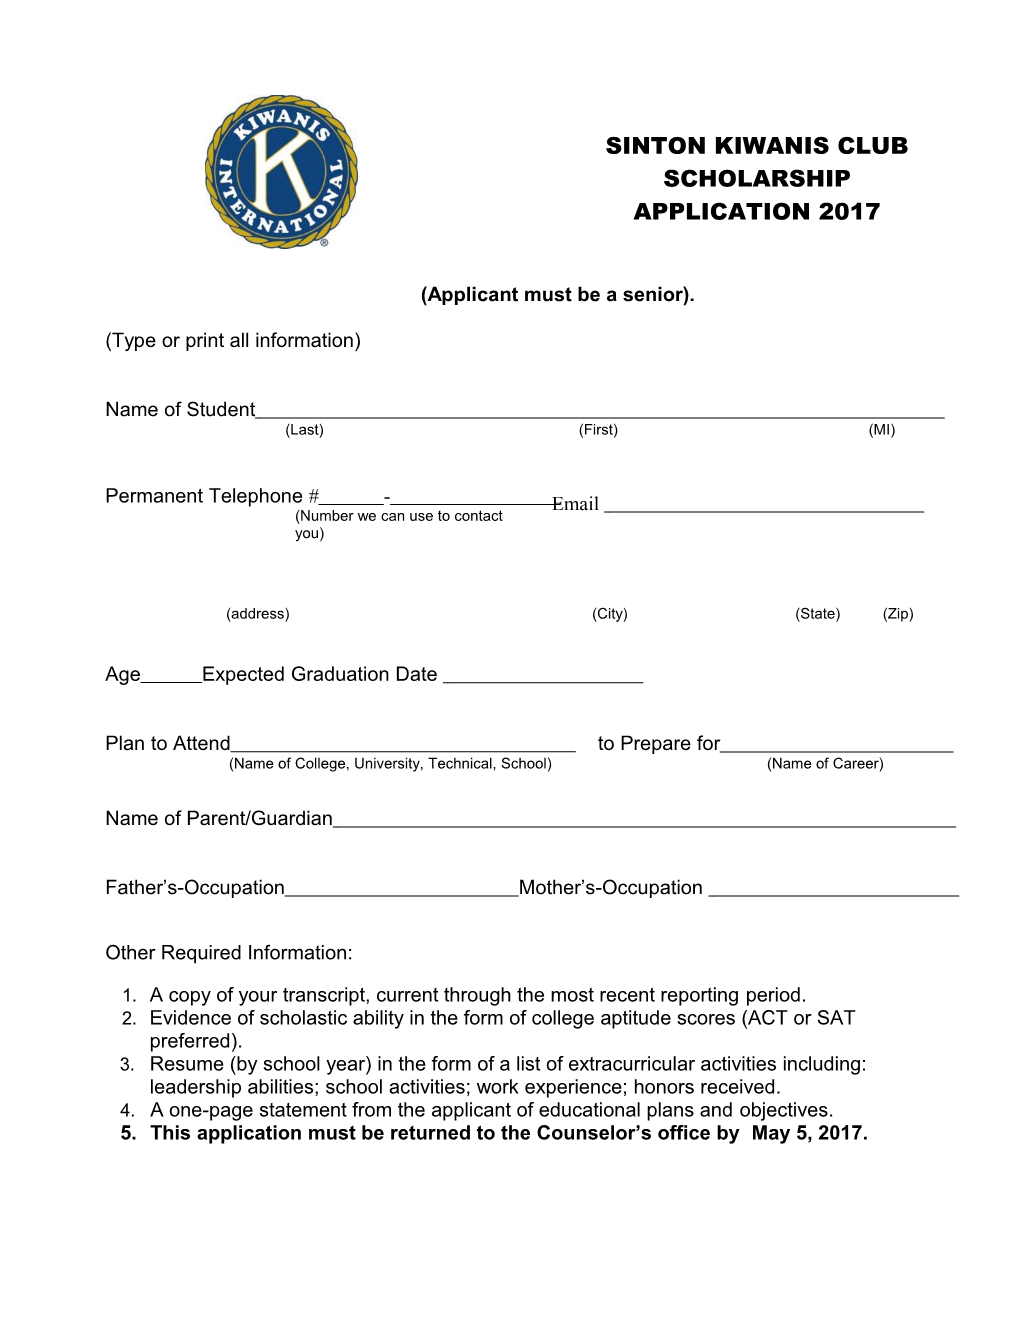 2017 Sinton Kiwanis Club Scholarship Application